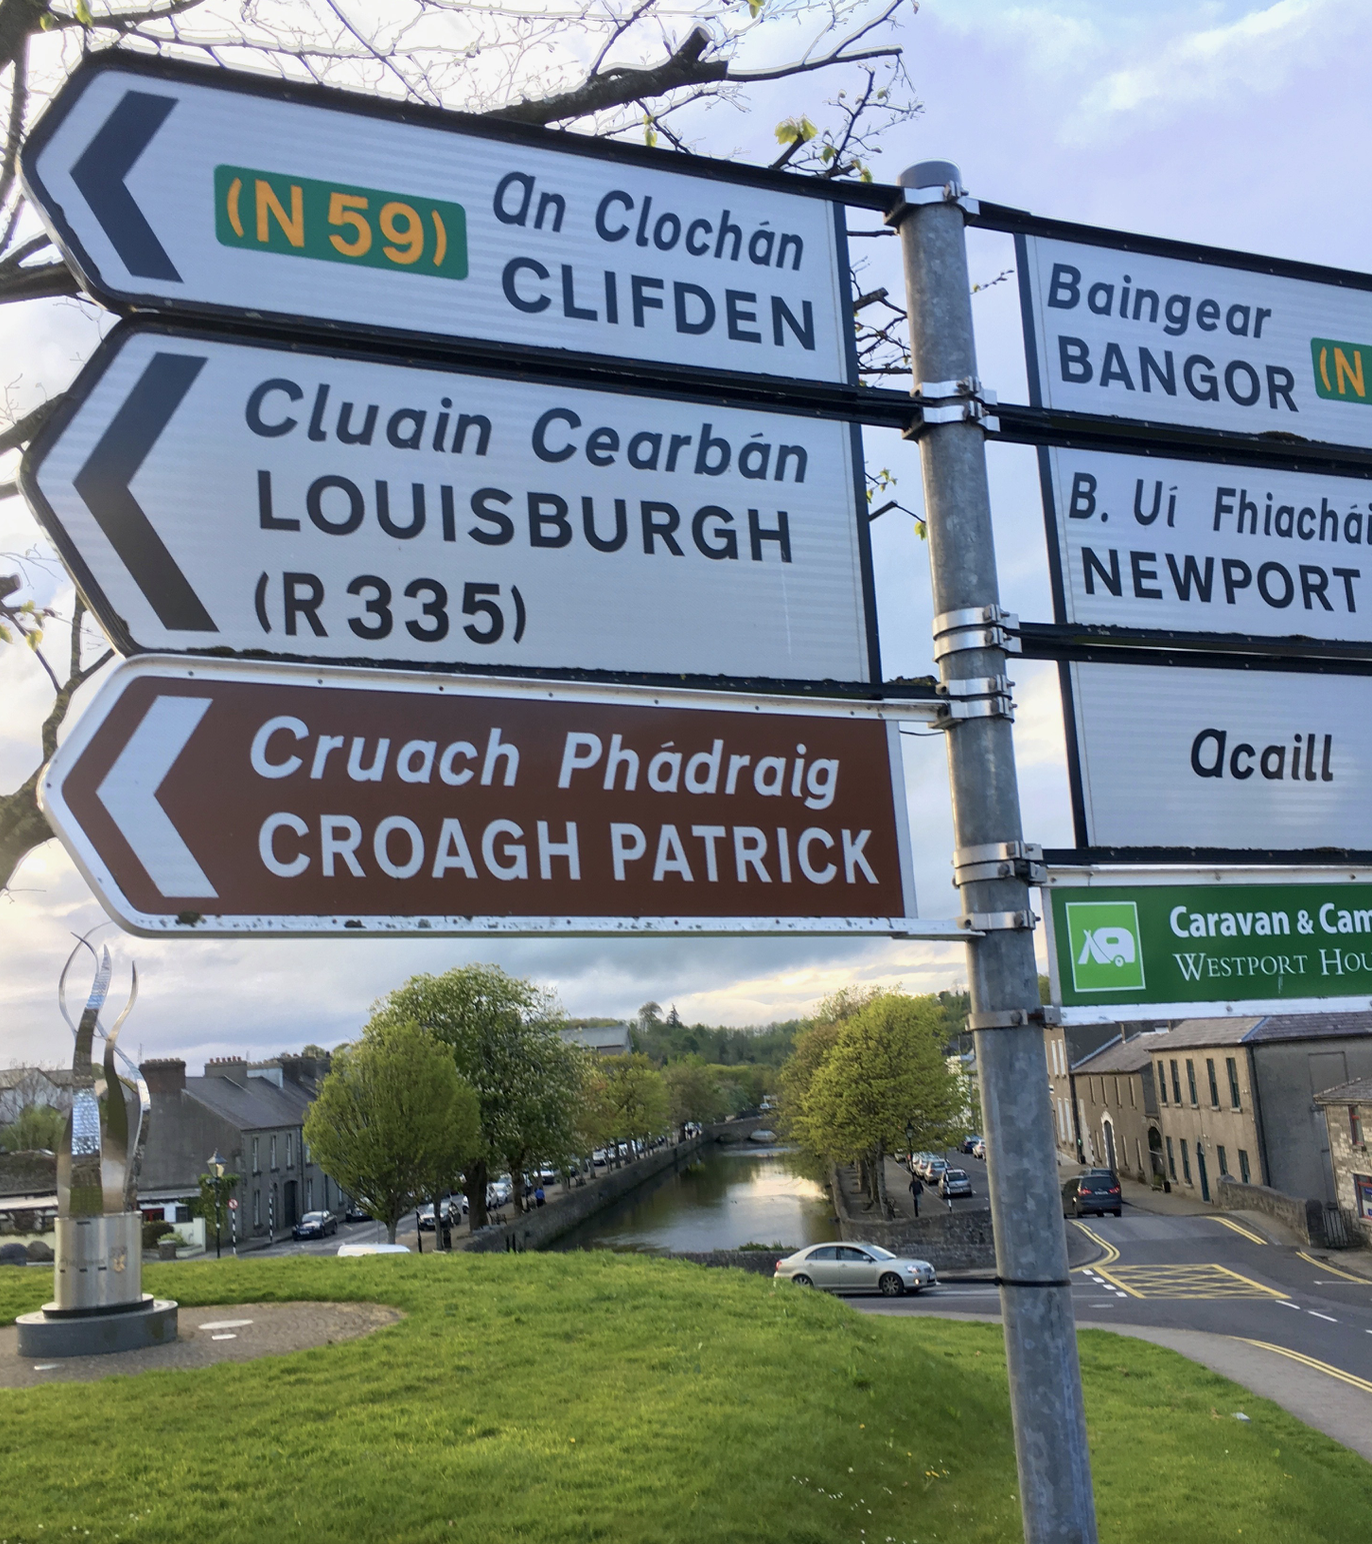 Signs in Westport with Irish text